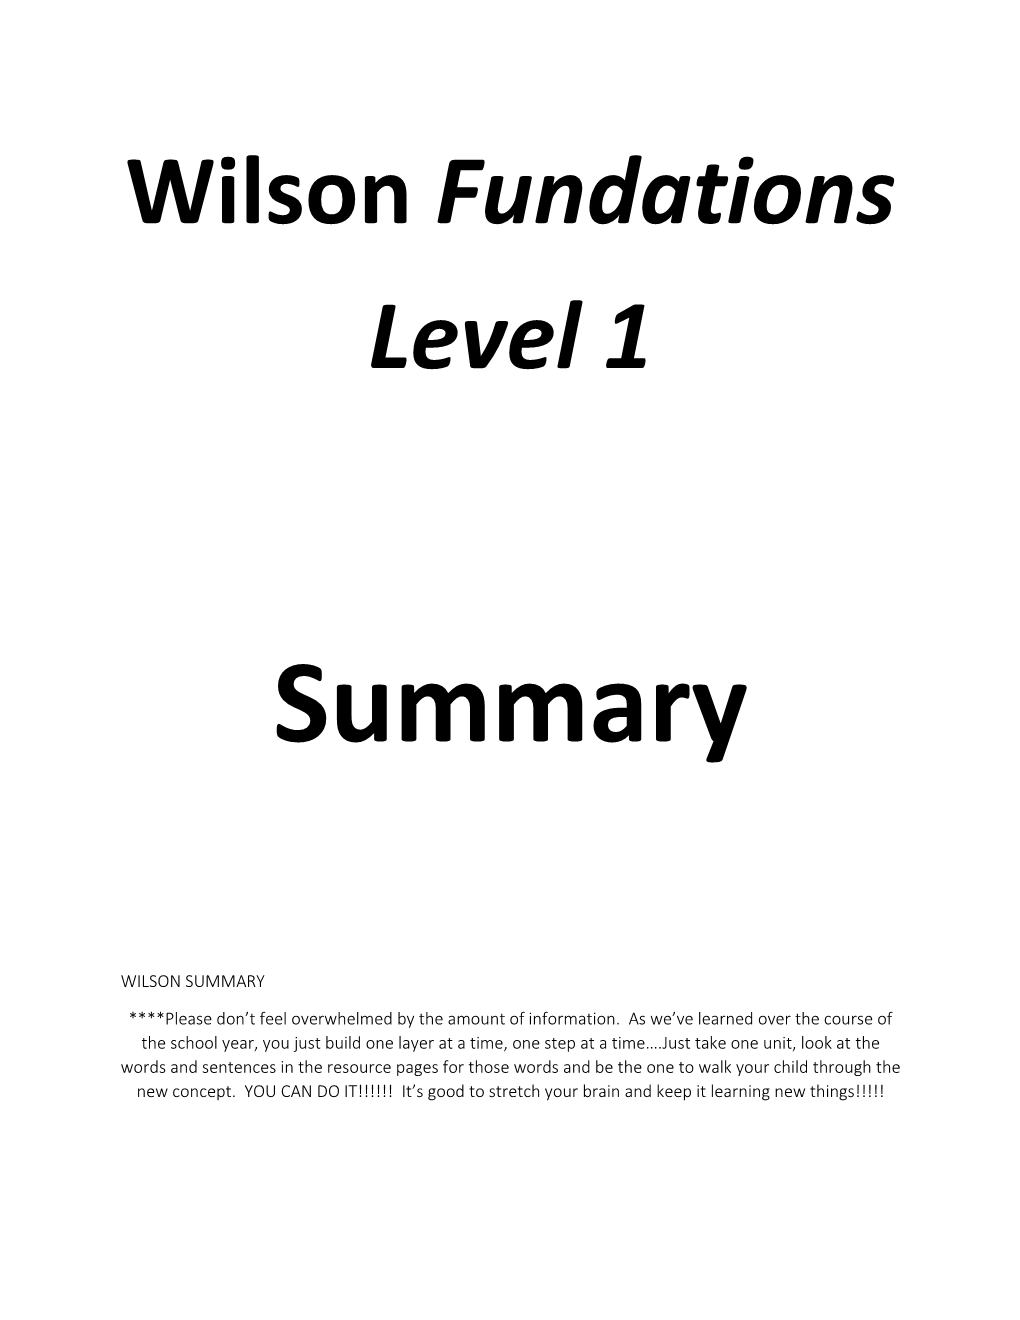 Wilson Fundations Level 1